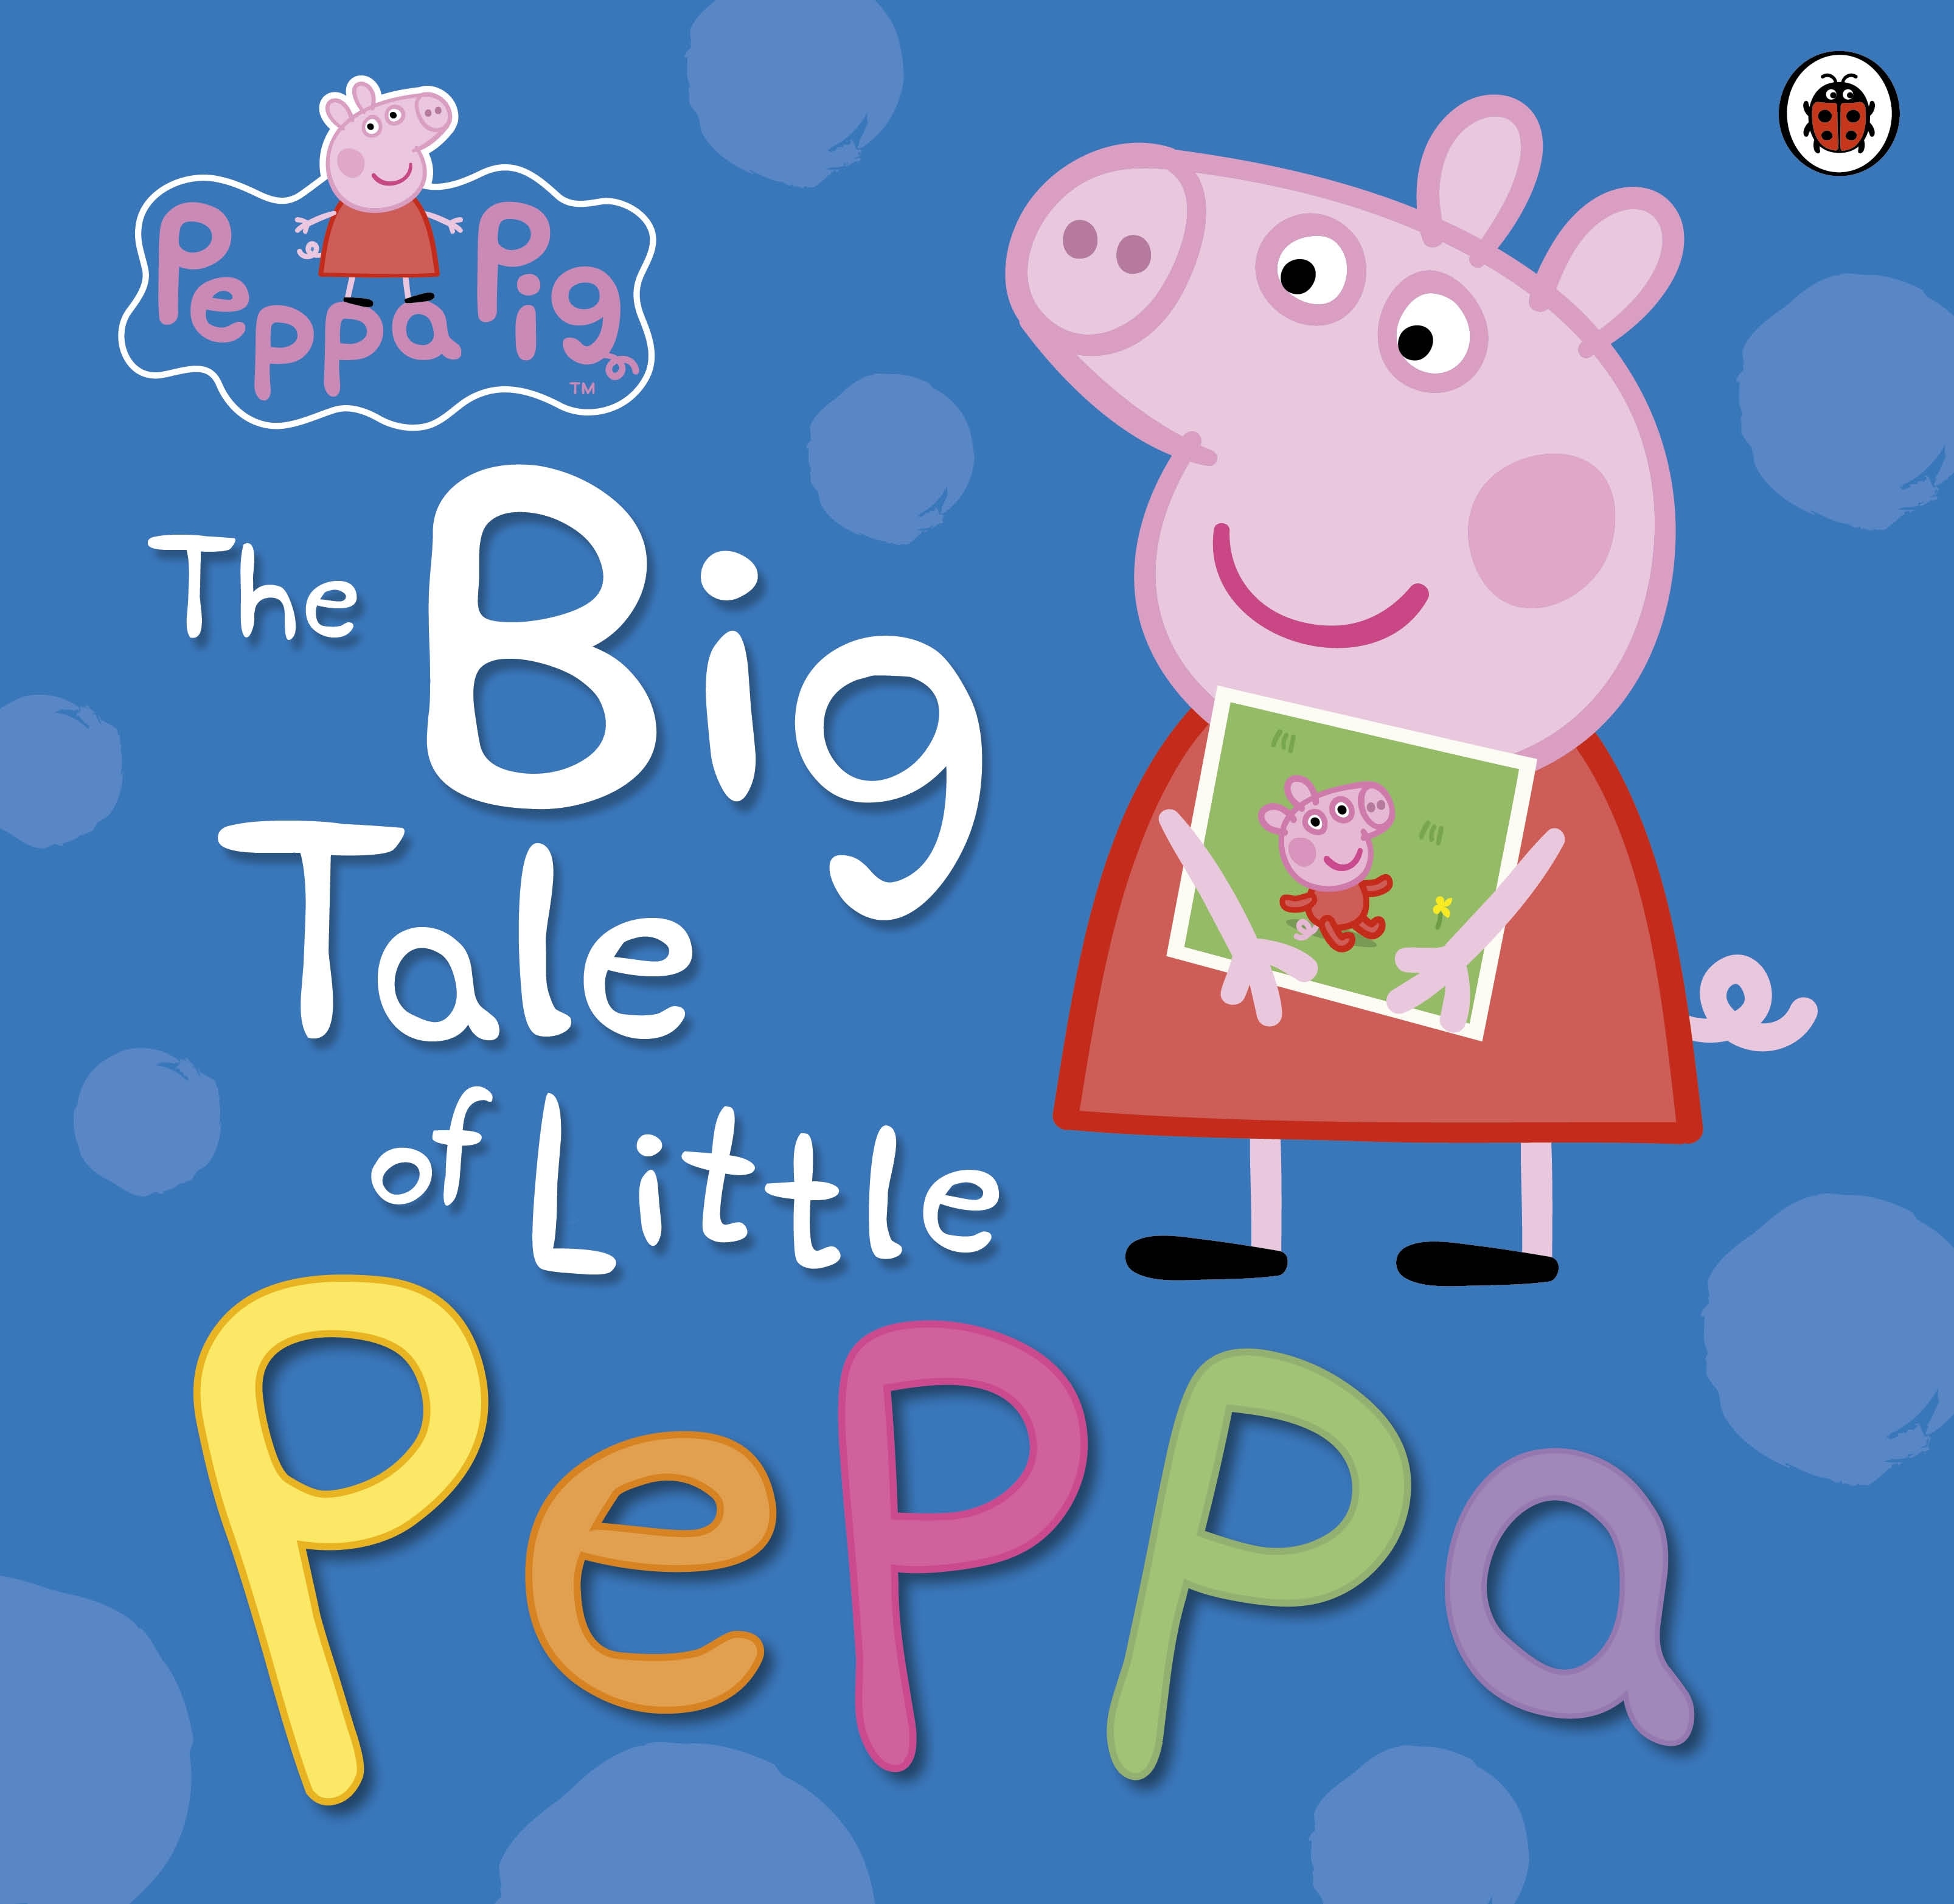 Book “Peppa Pig: The Big Tale of Little Peppa” by Peppa Pig — July 2, 2015